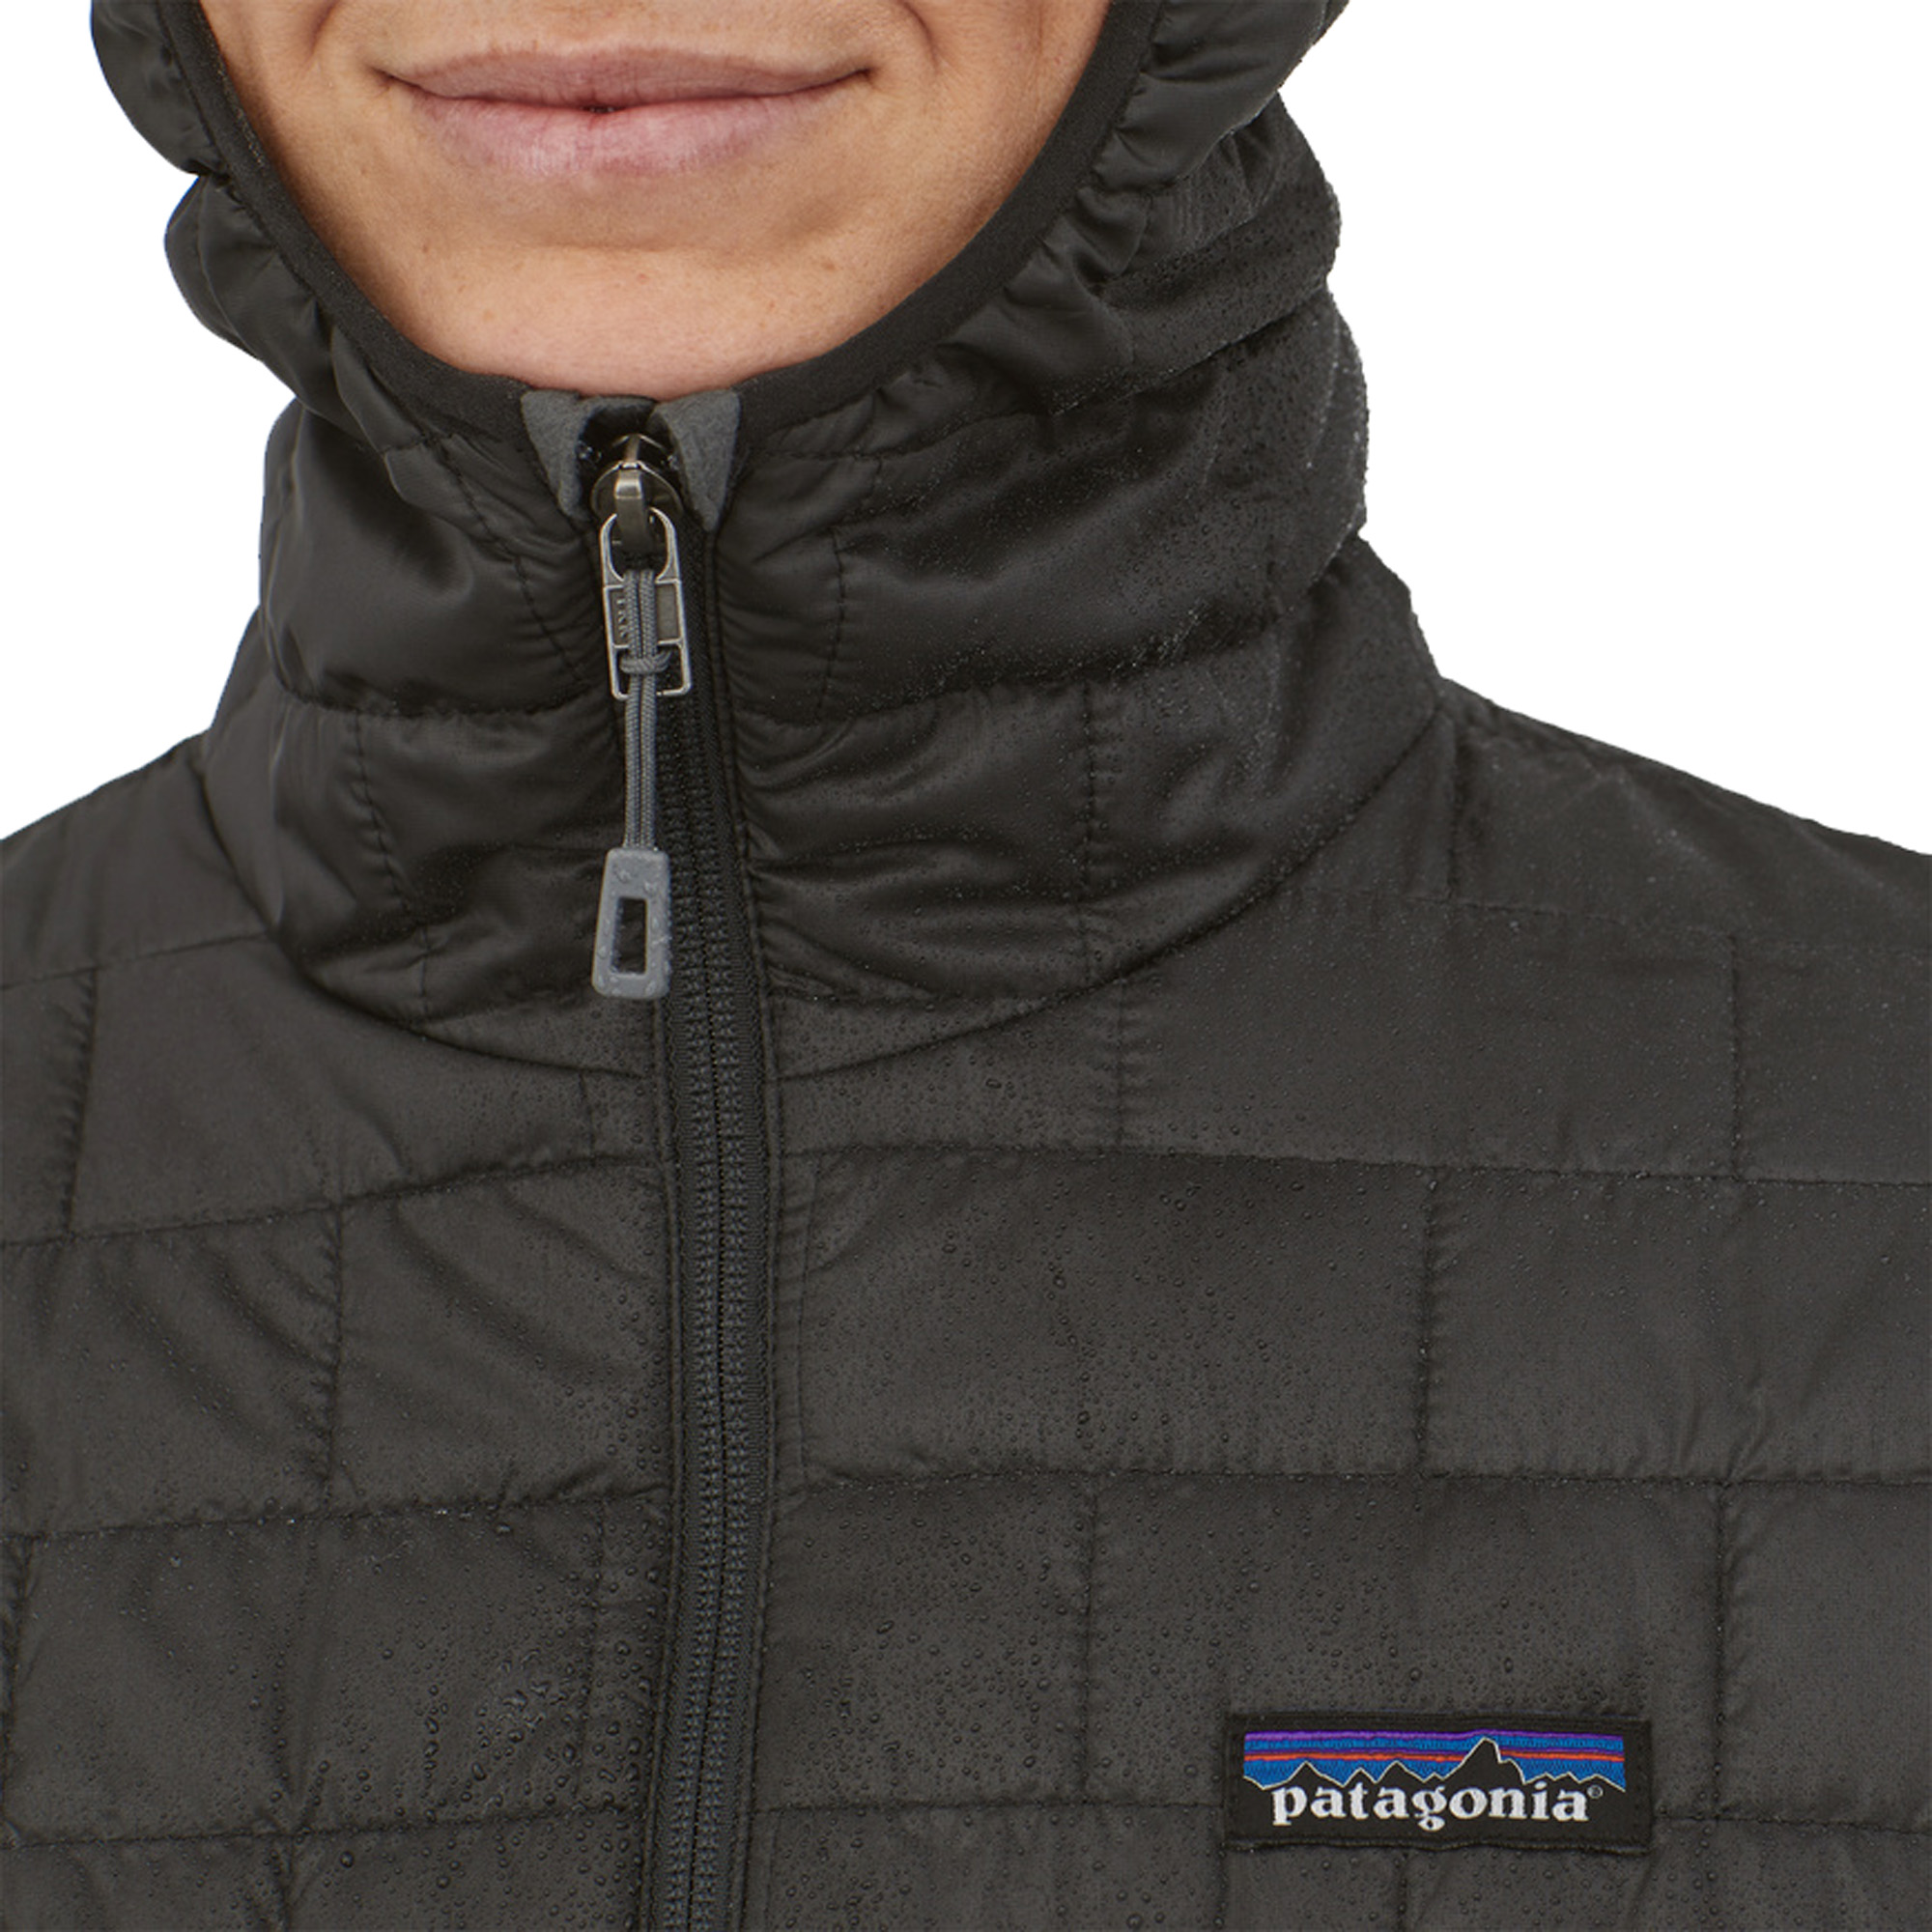 Patagonia Nano Puff Hoody Women's Insulated Jacket